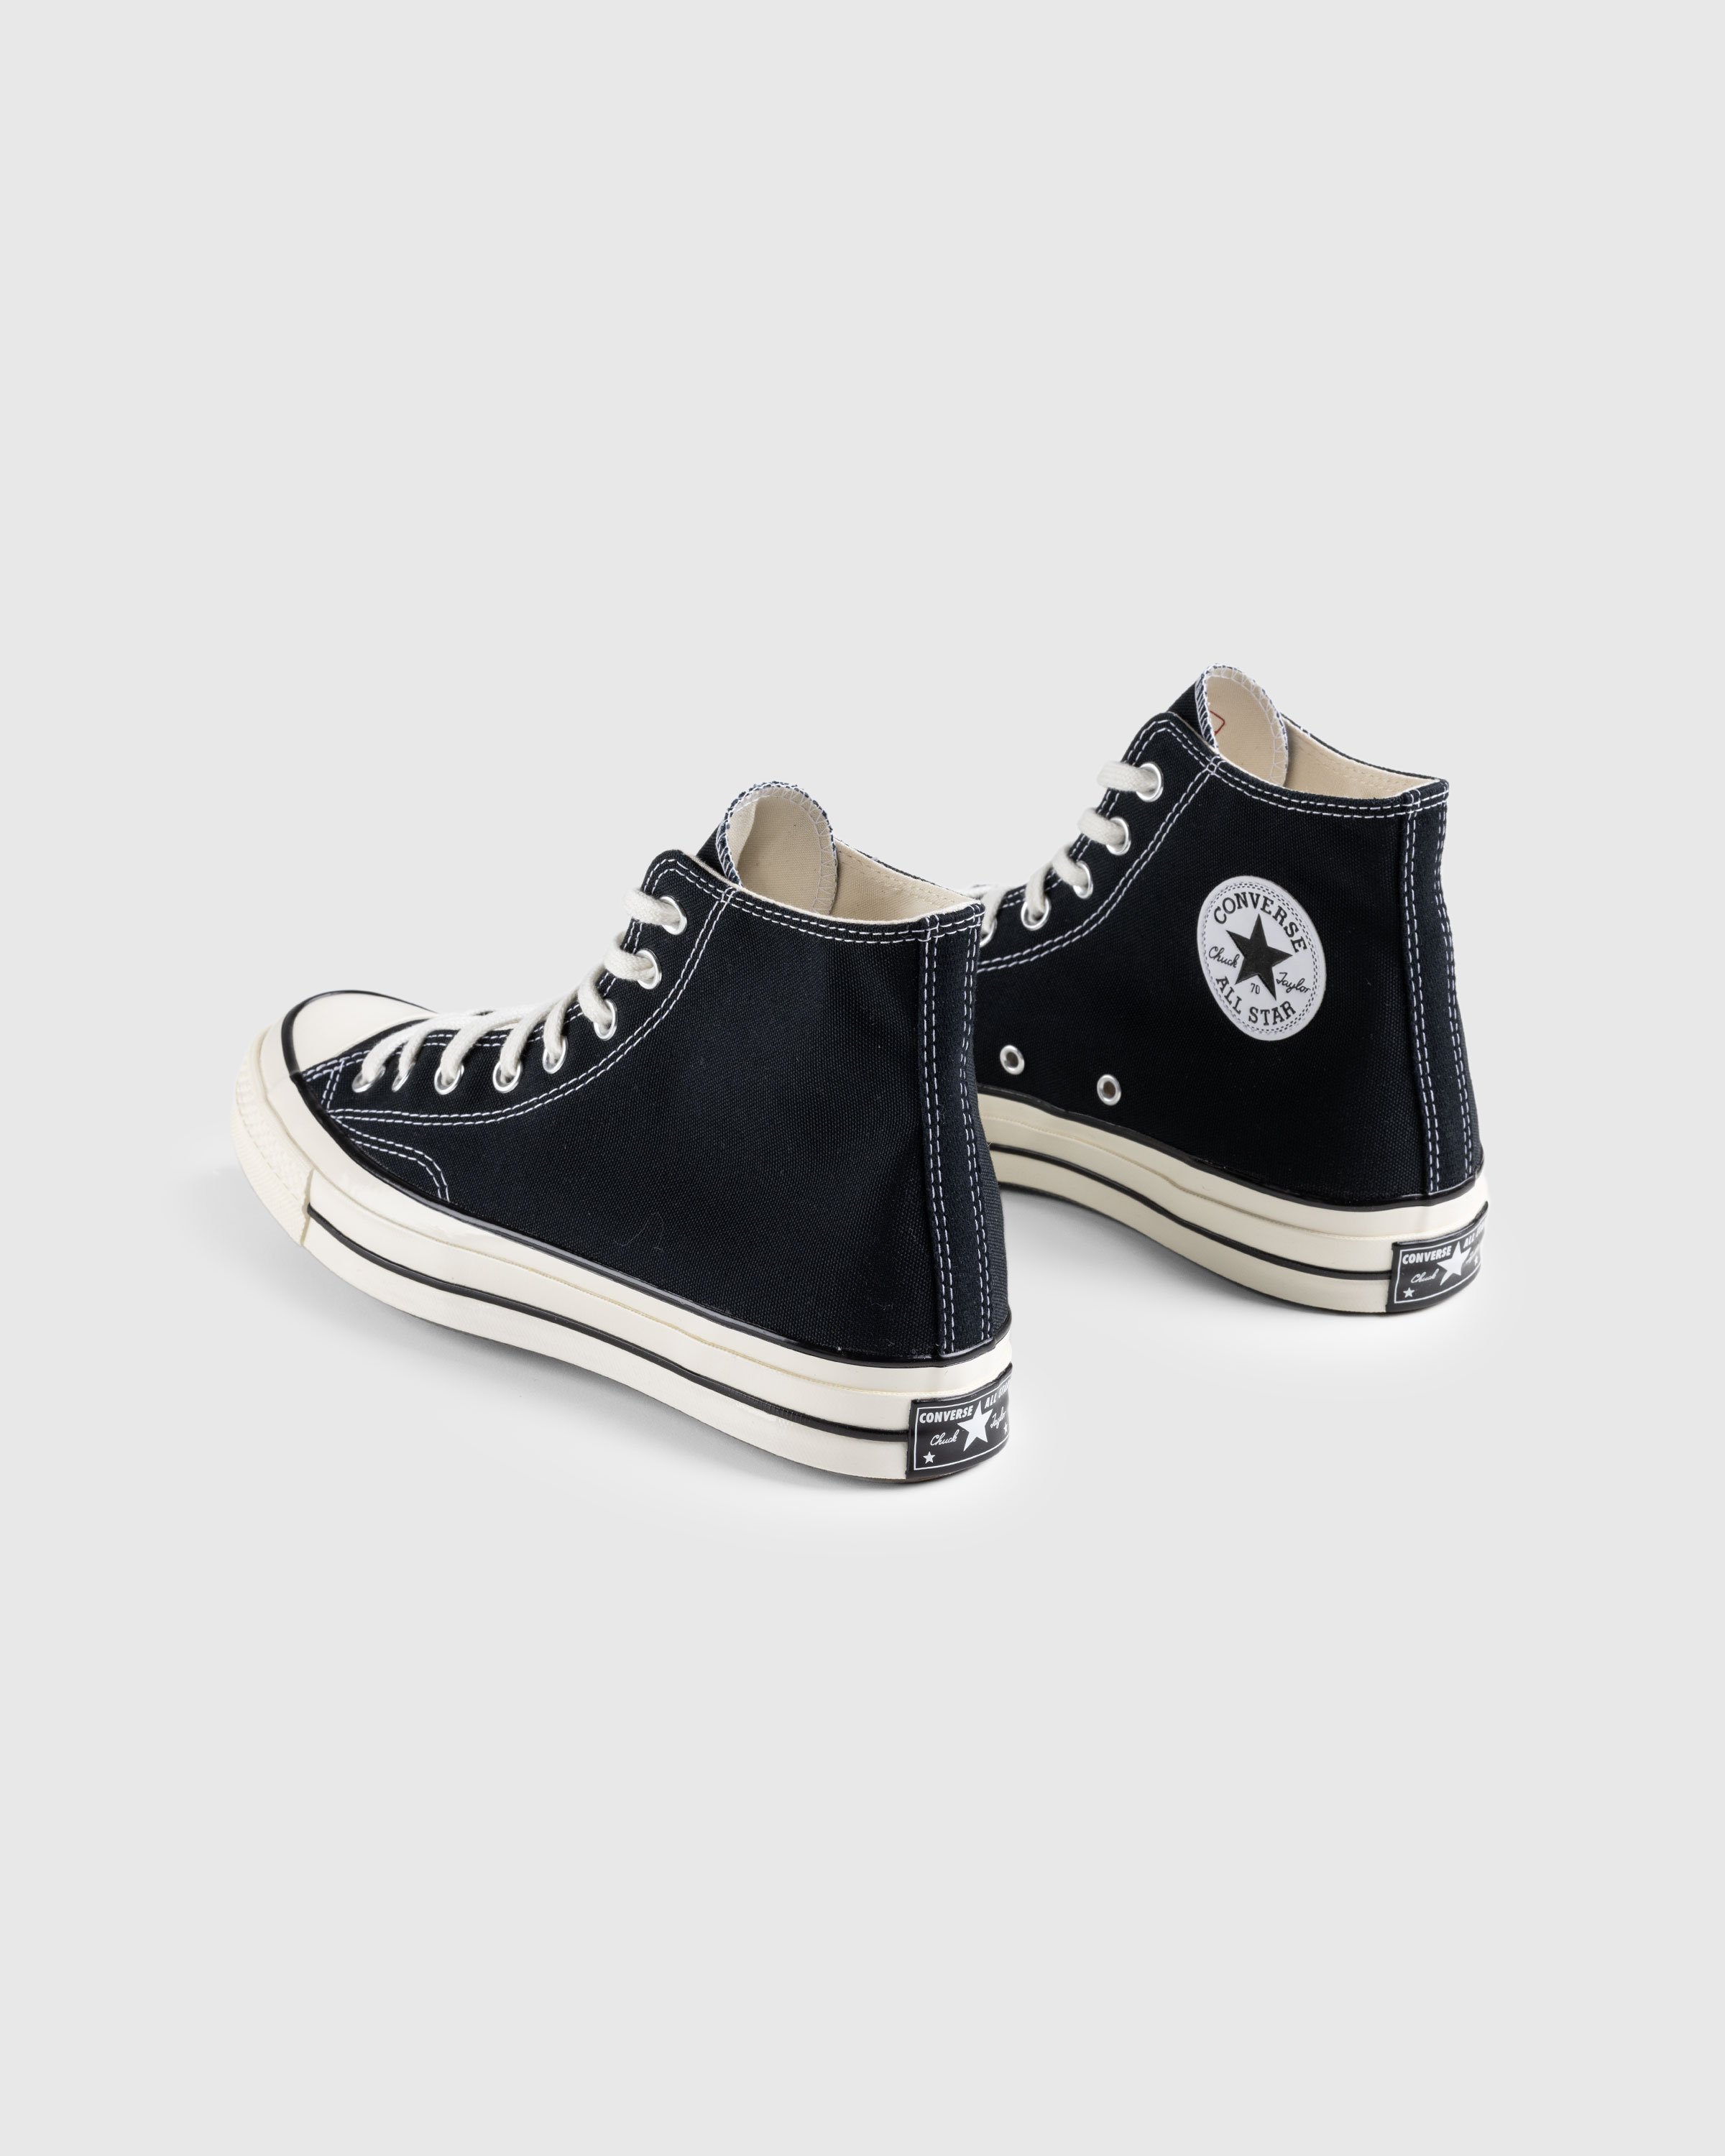 Converse - Chuck 70 Hi Black/Black/Egret - Footwear - Black - Image 4